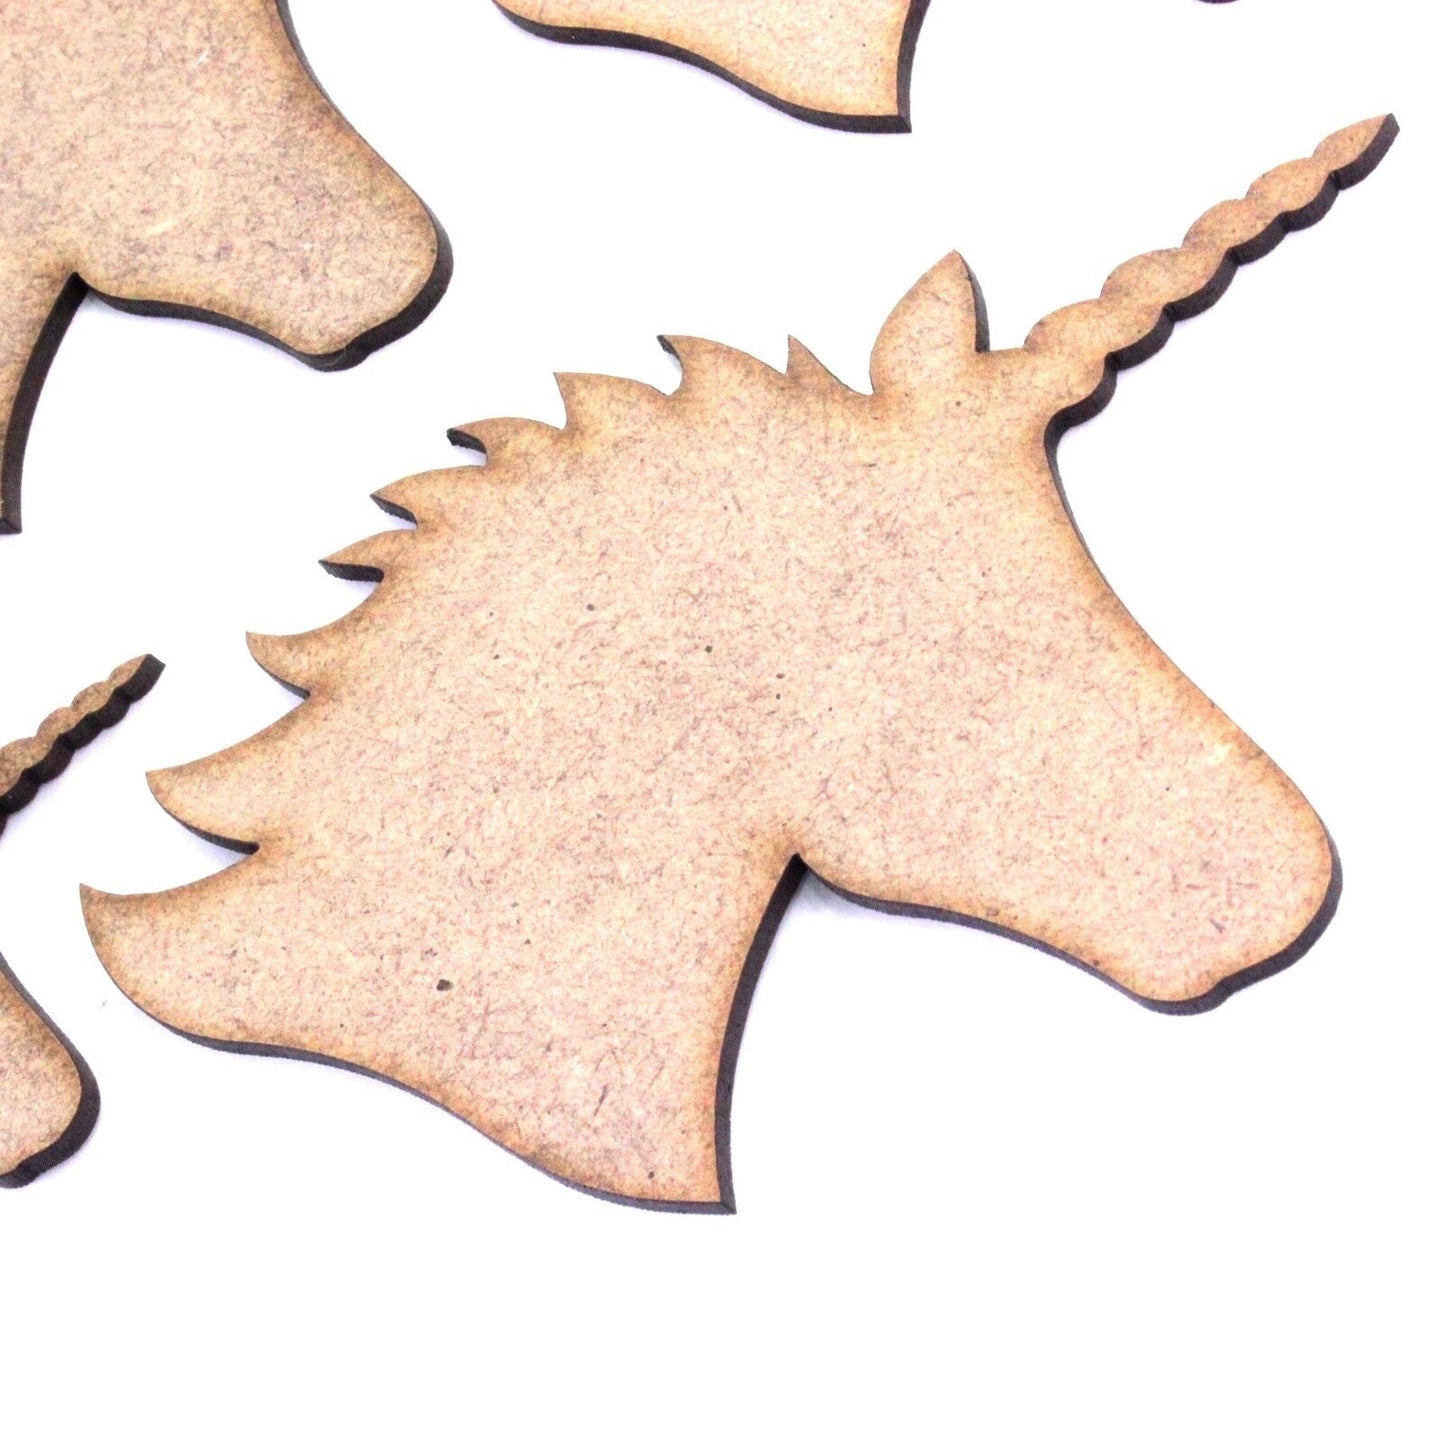 Unicorn Head Craft Shape, Various Sizes, 2mm MDF Wood. Mythical, Fairytale